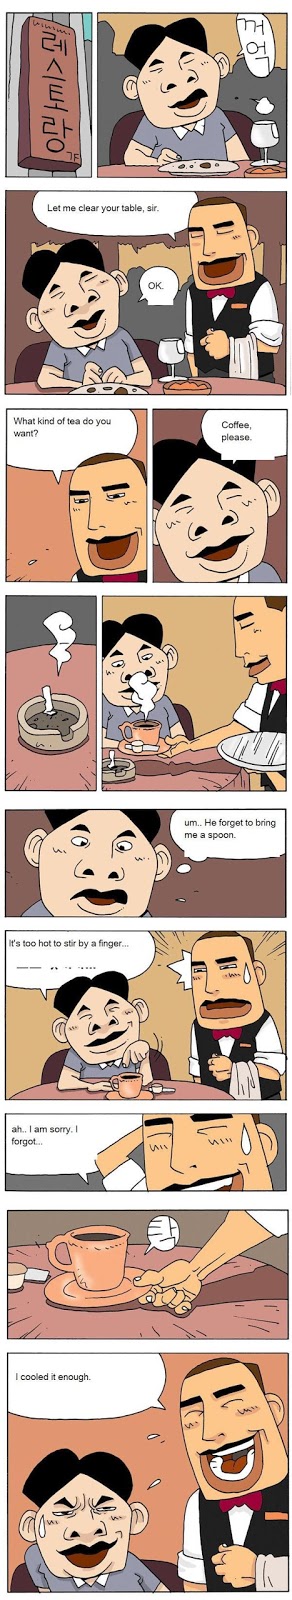 Yang Young-soon Korean Comics no spoon to stir coffee